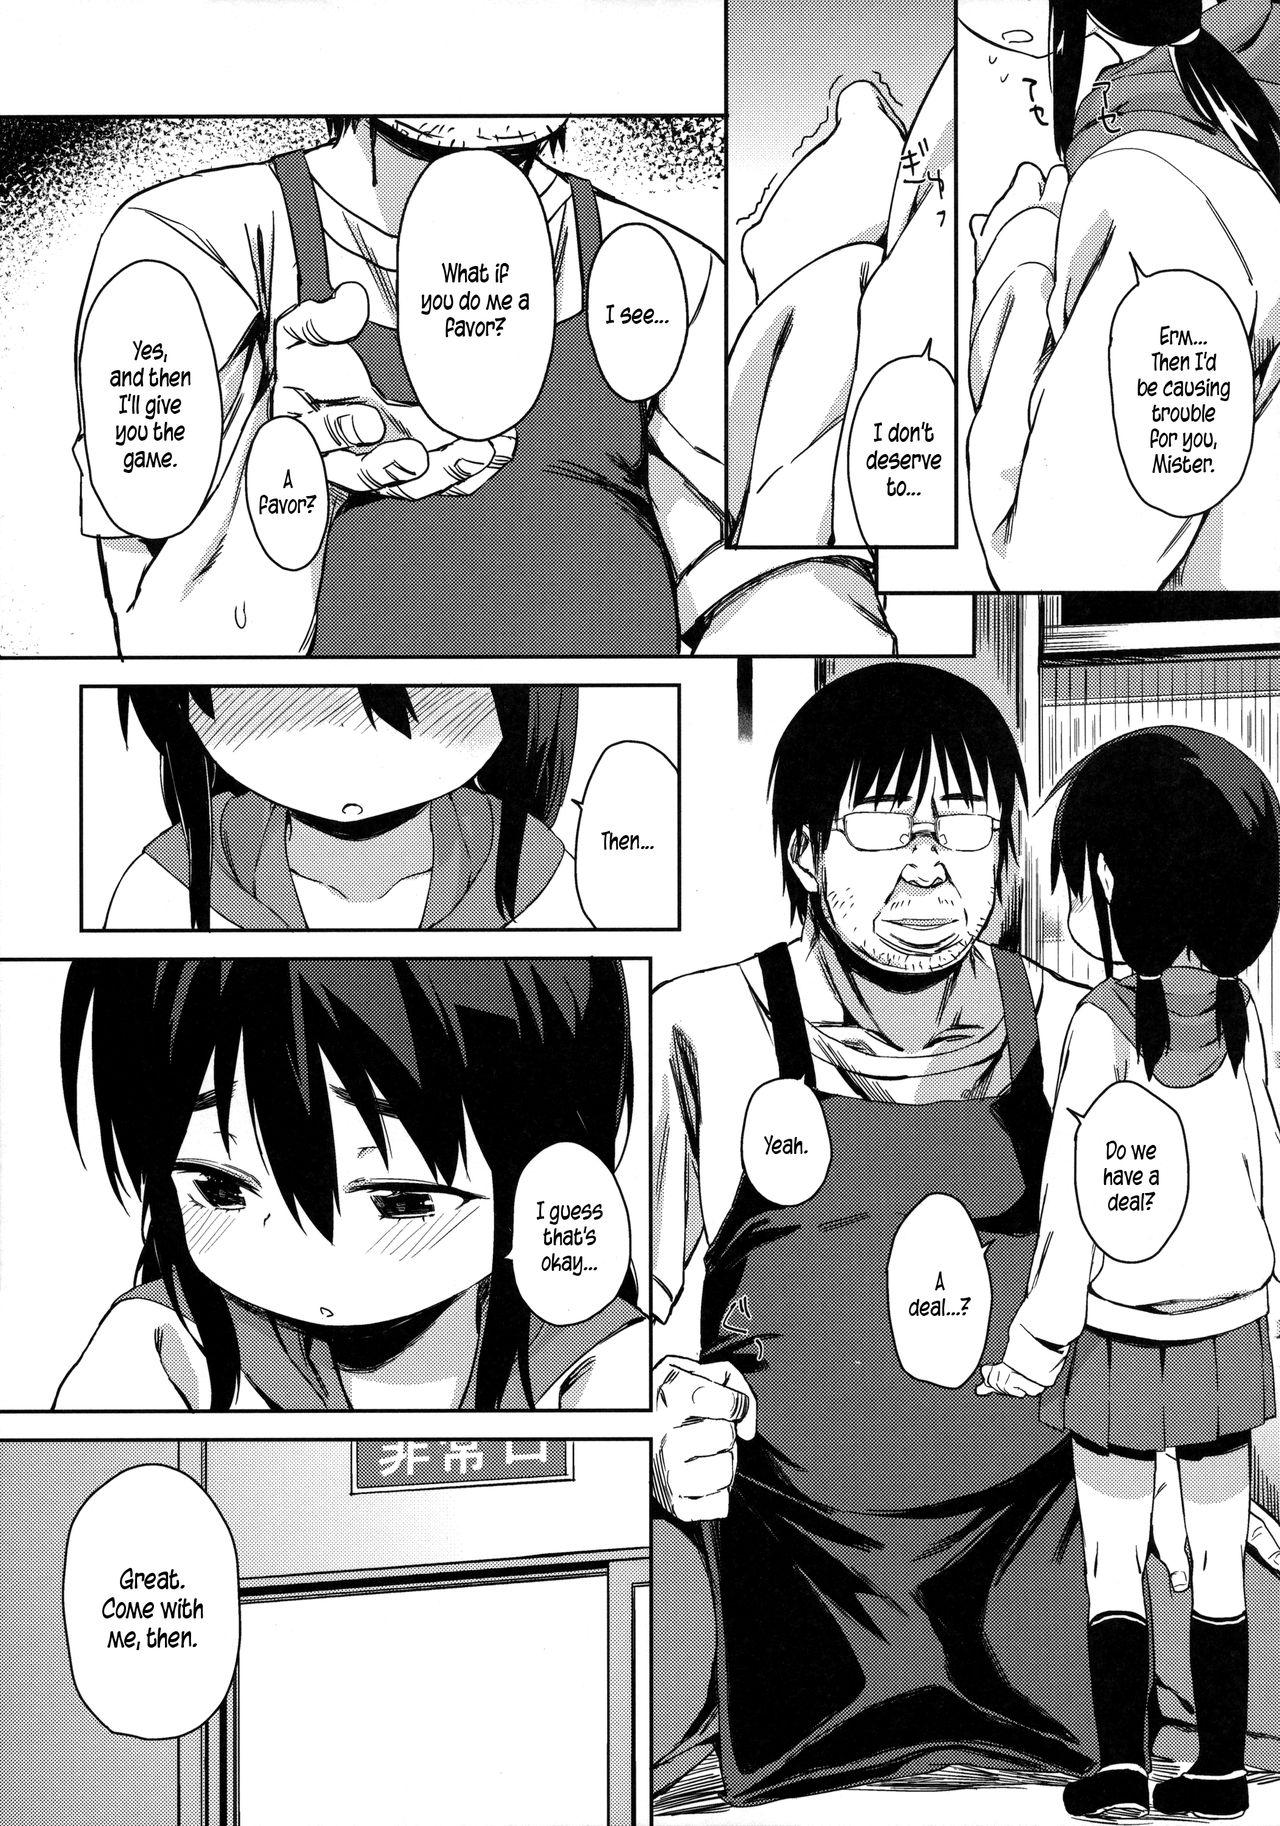 Breasts Otomodachi no Tsukurikata | How To Make a Friend 18 Porn - Page 7